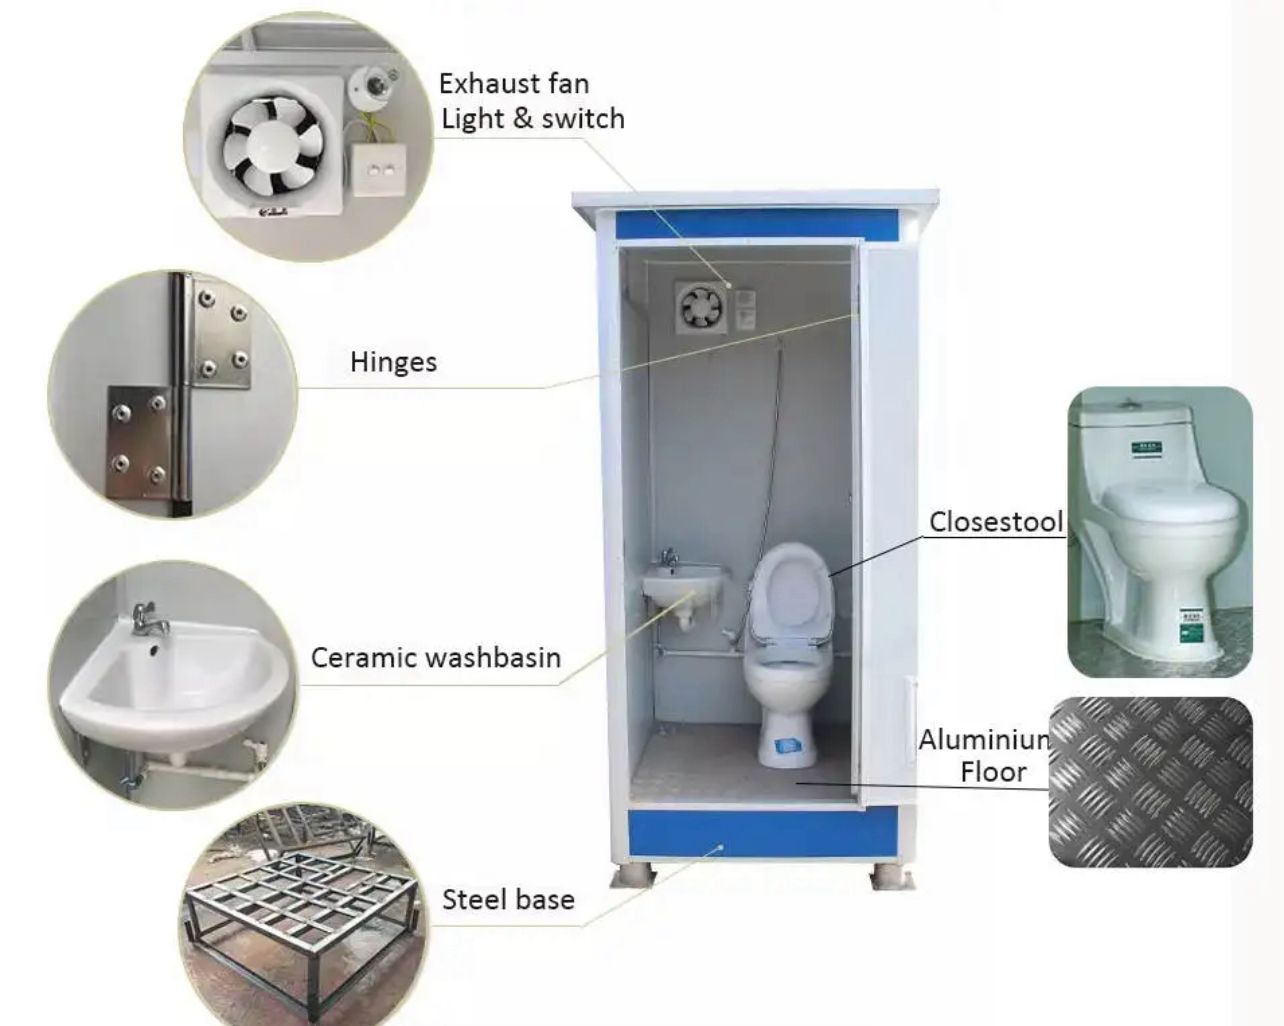 Outdoor prefabricated public bathroom convenient portable mobile toilet